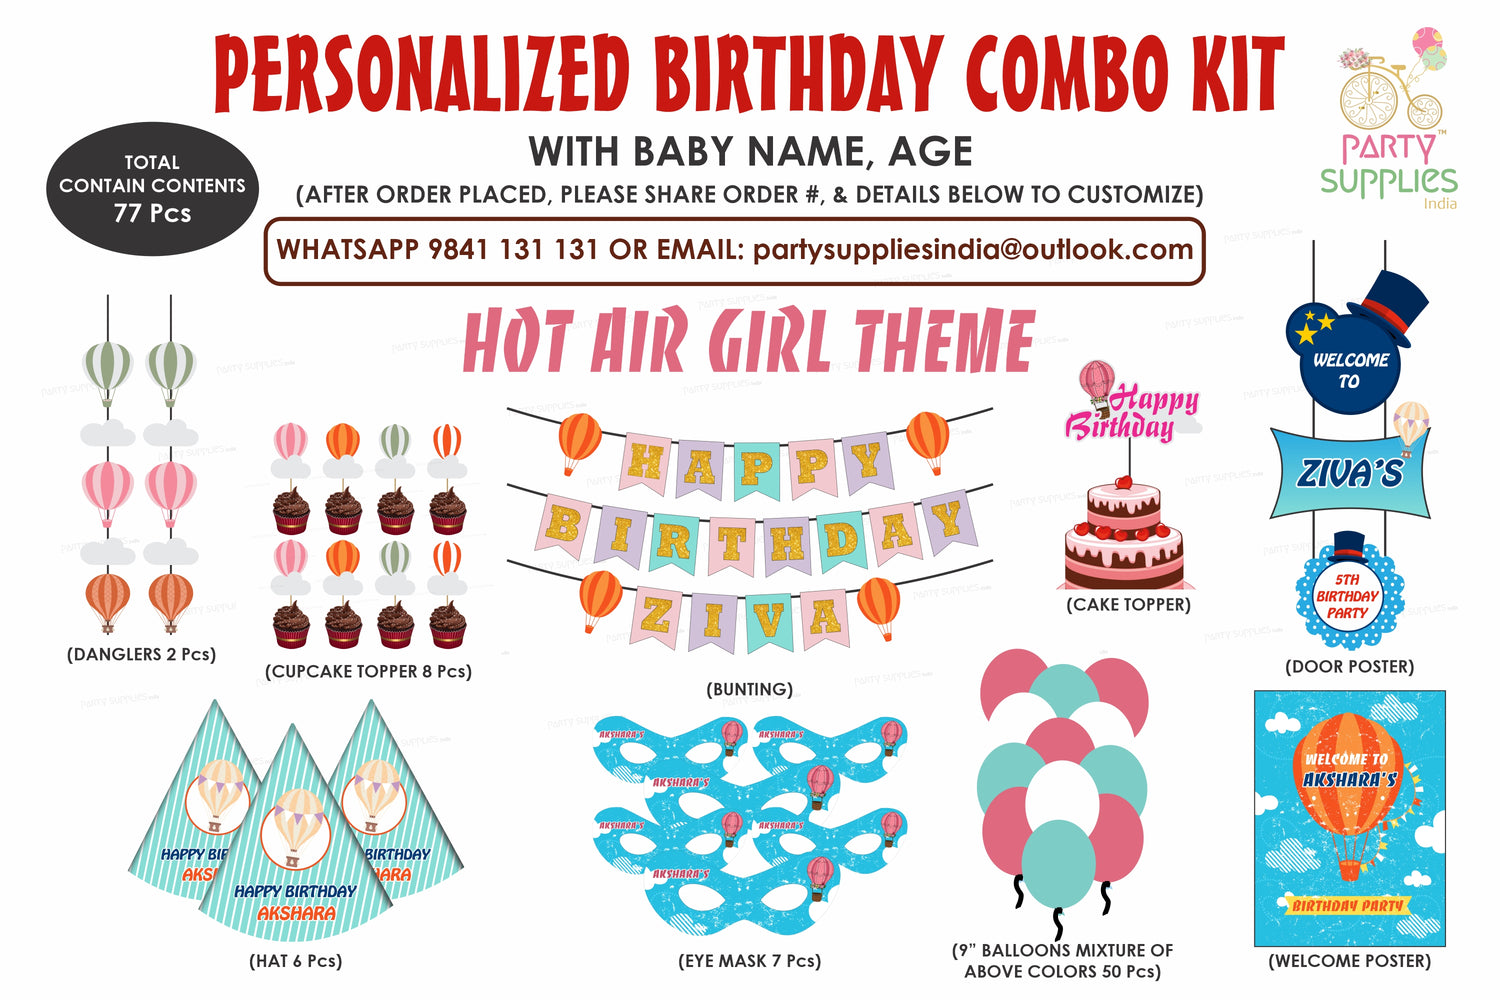 PSI Hot Air Girl Theme Preferred Kit